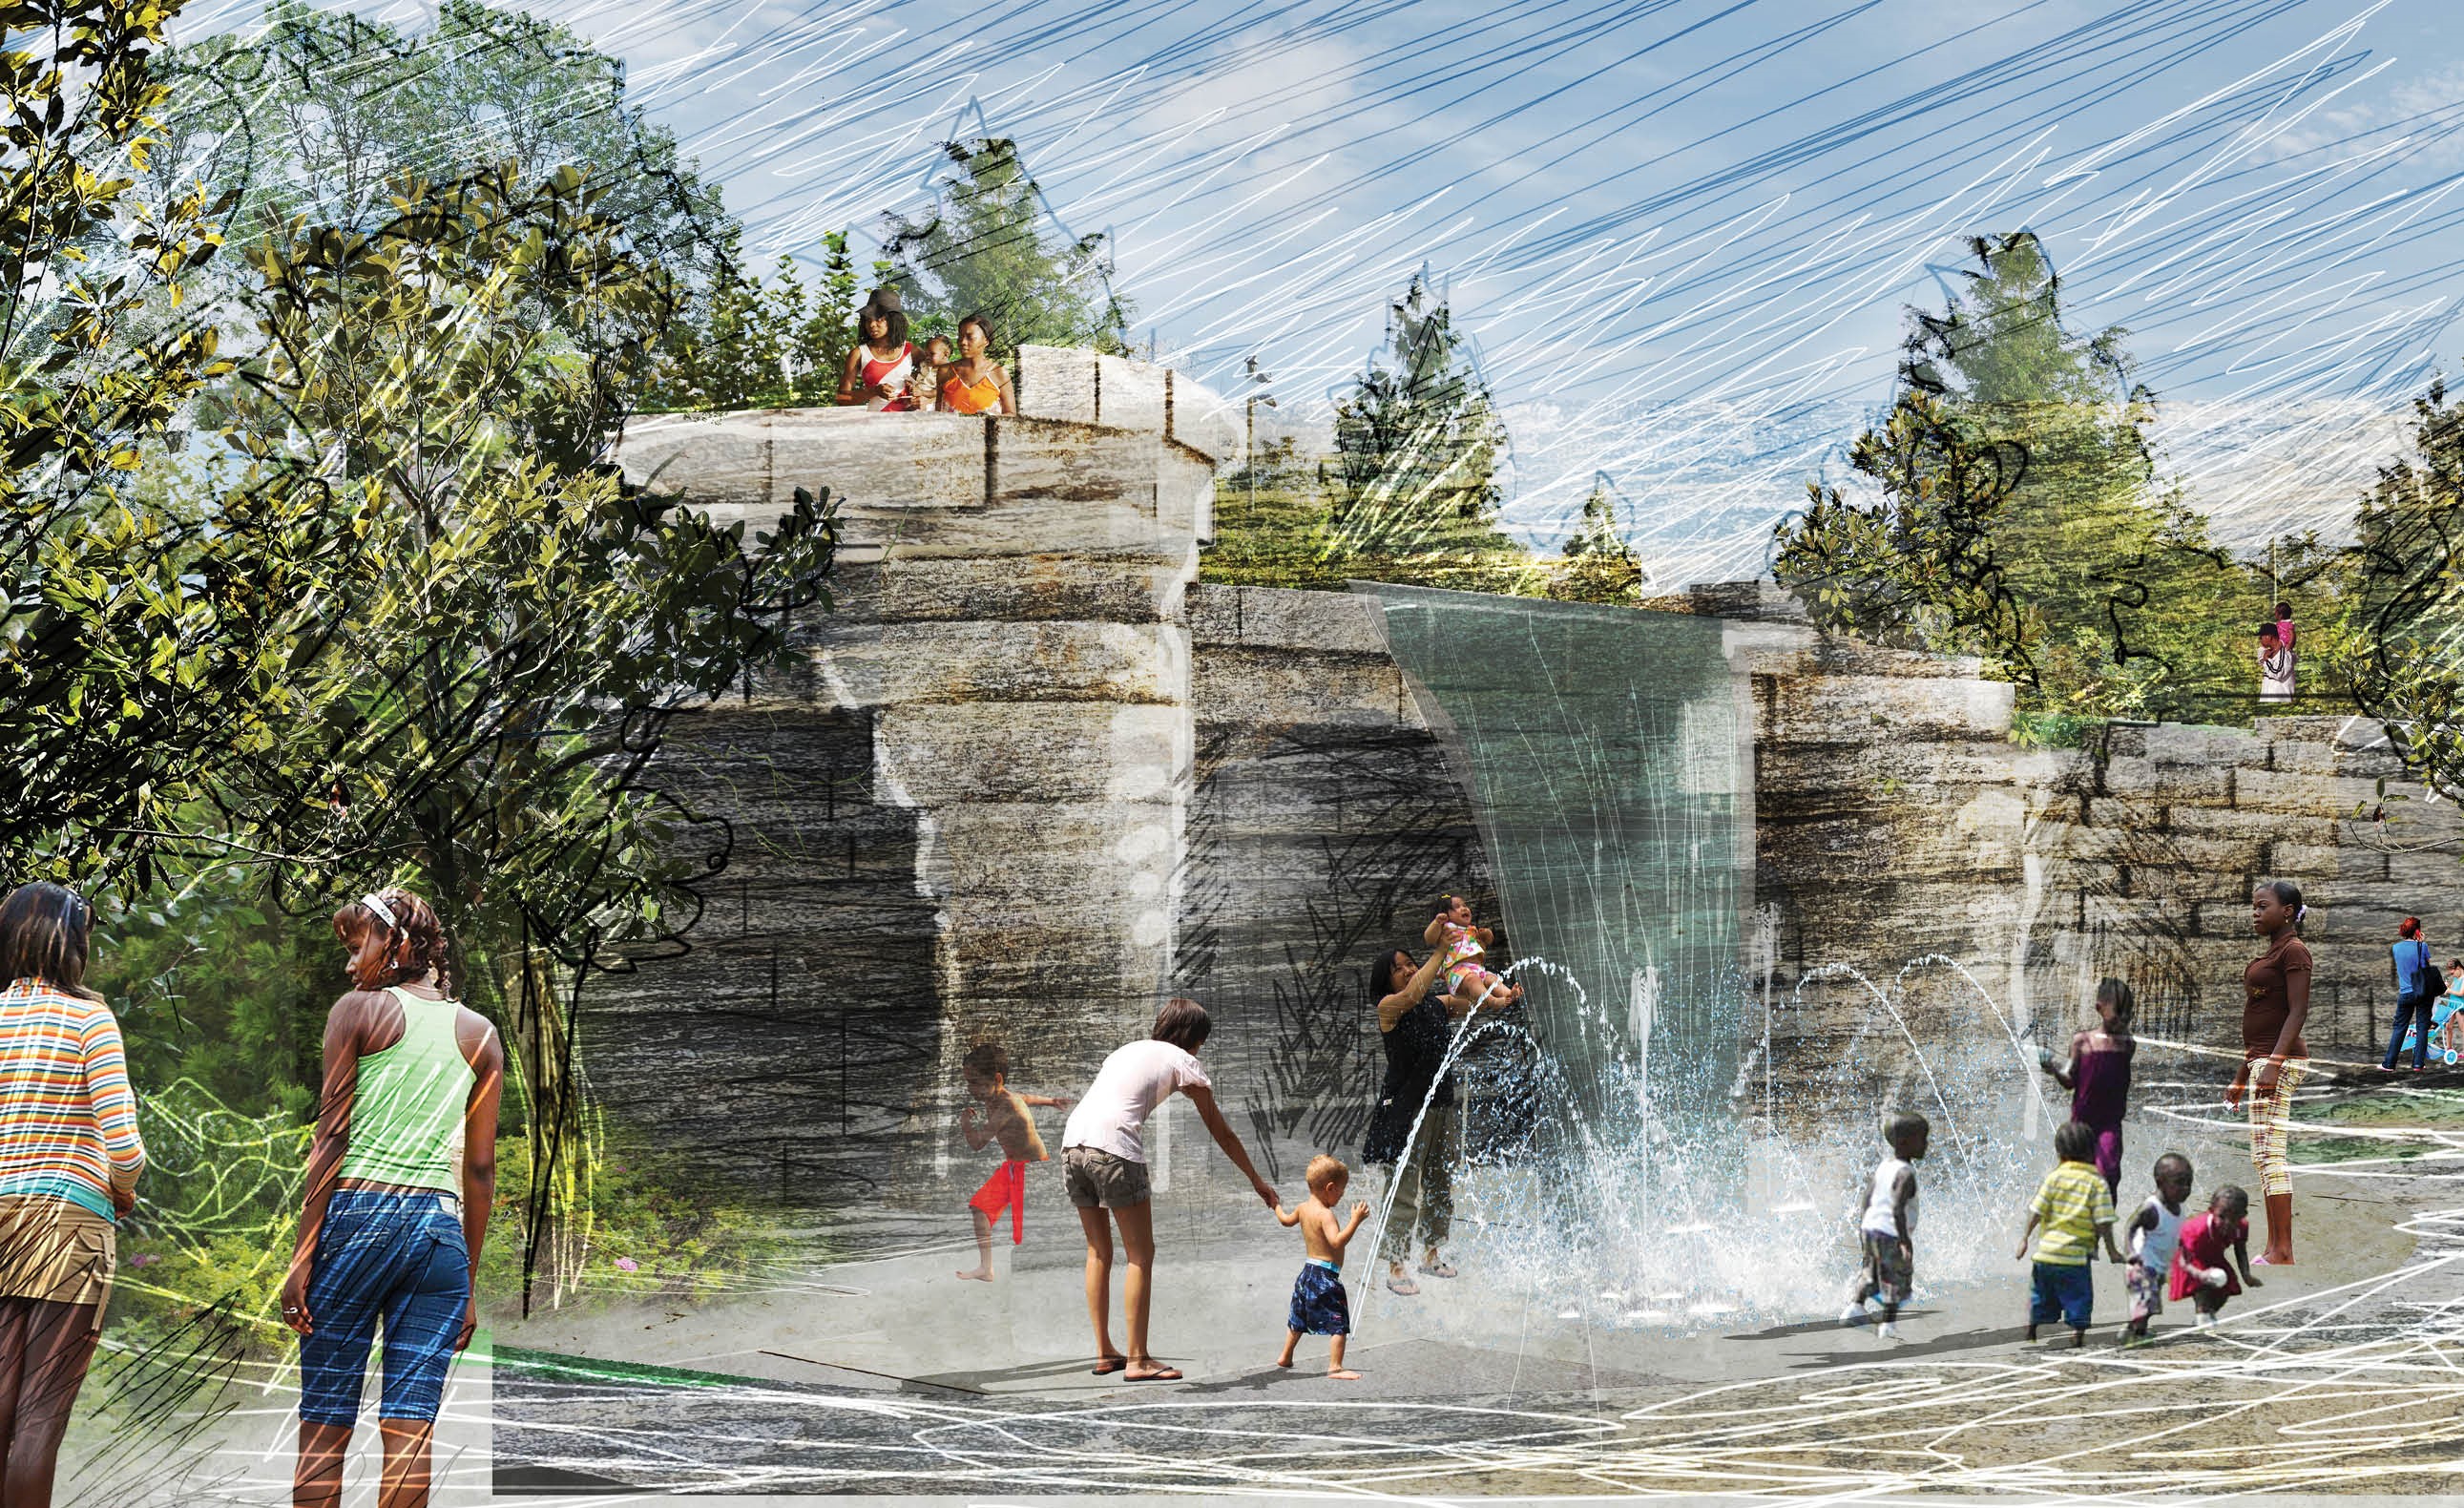 Waterfall Wall rendering - Gipson Play Plaza at Dix Park